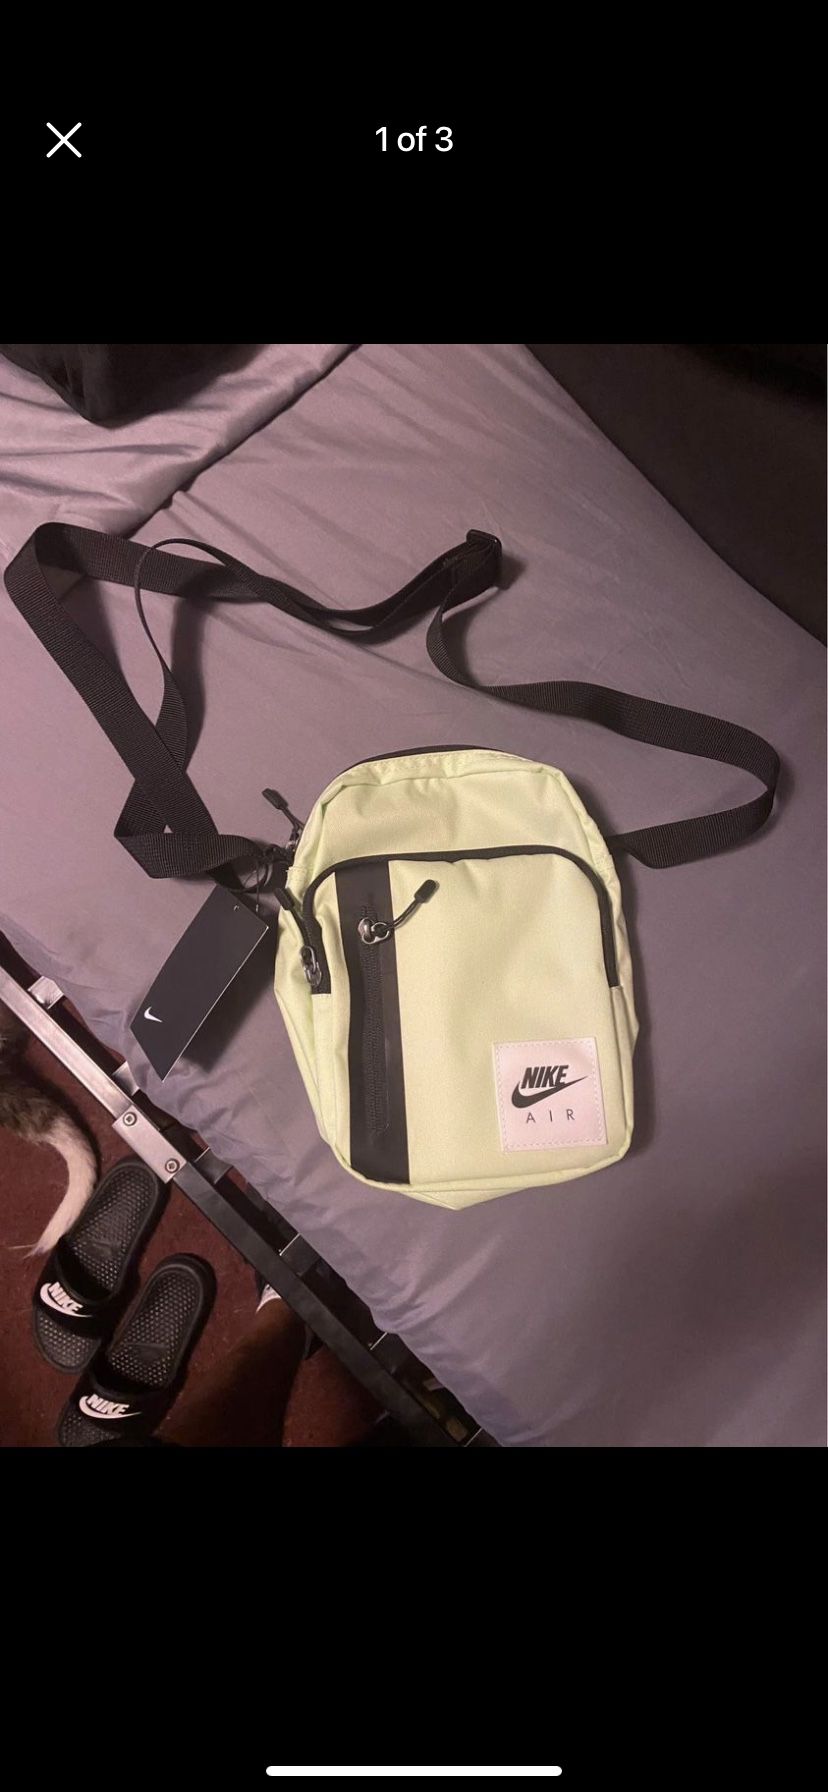 Men’s Nike Tech Bag